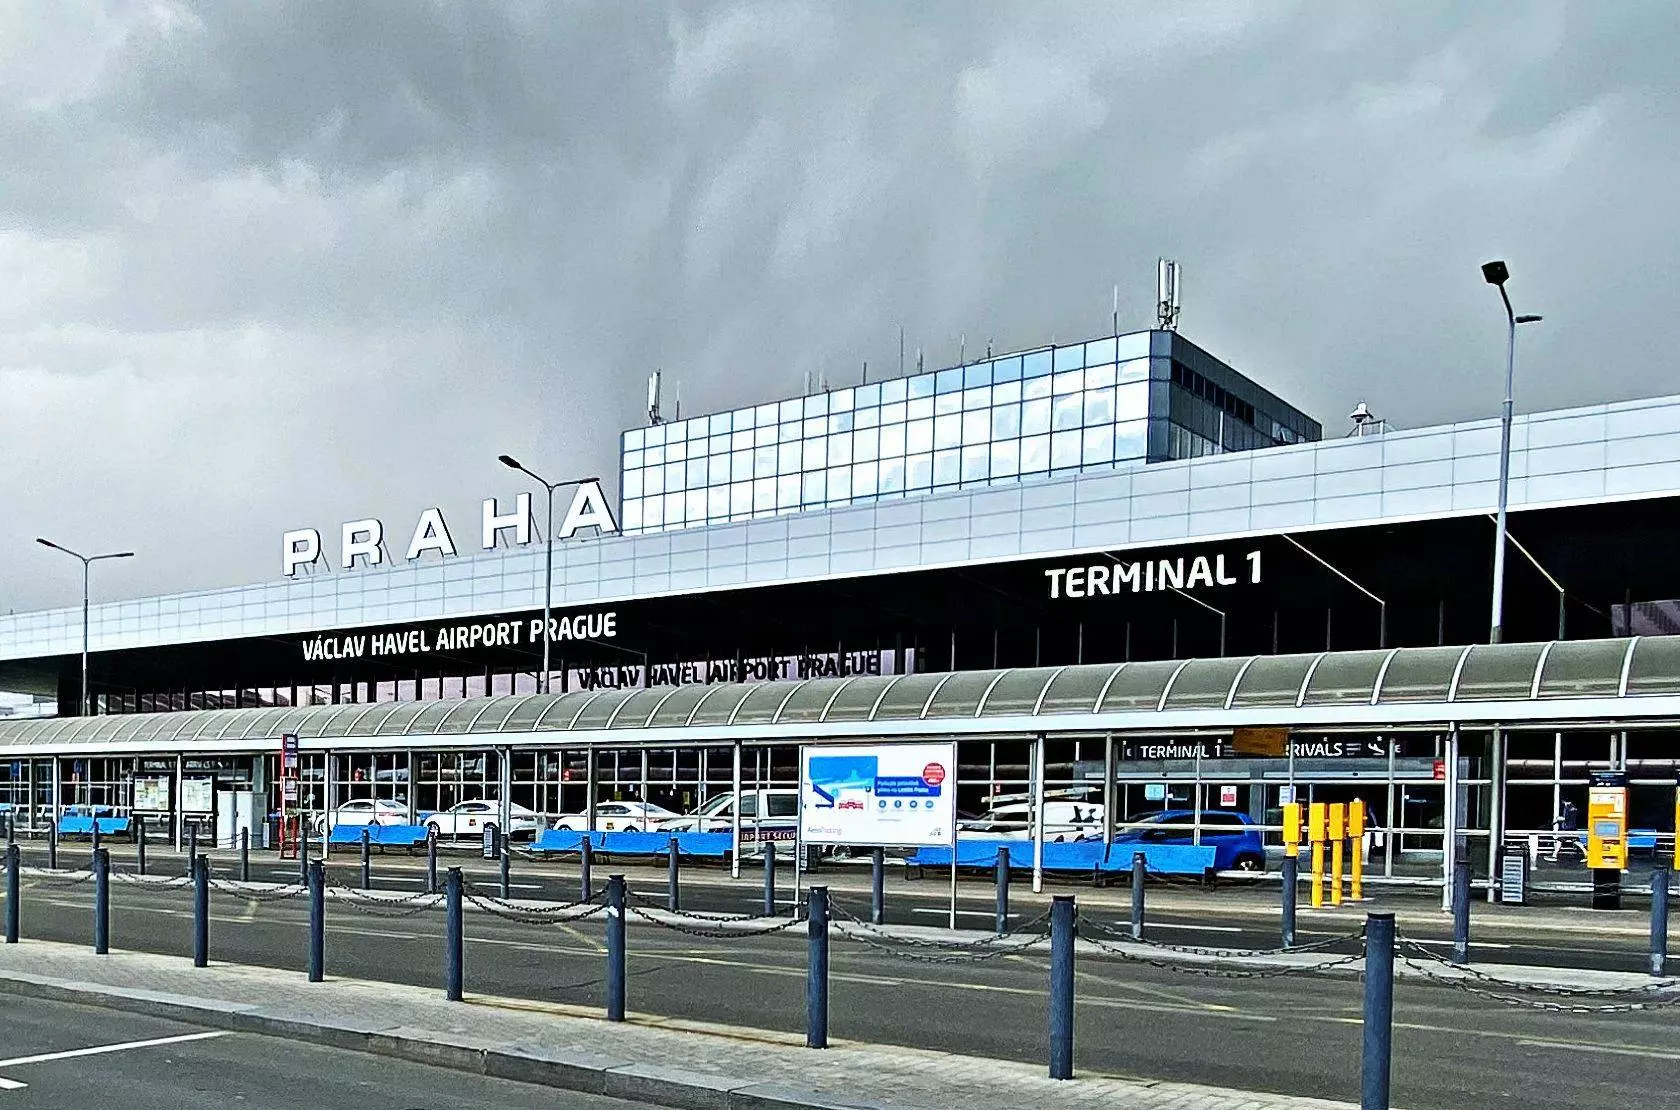 Аэропорт prague vaclav havel airport (prg) — онлайн-табло отправления | flight-board.ru